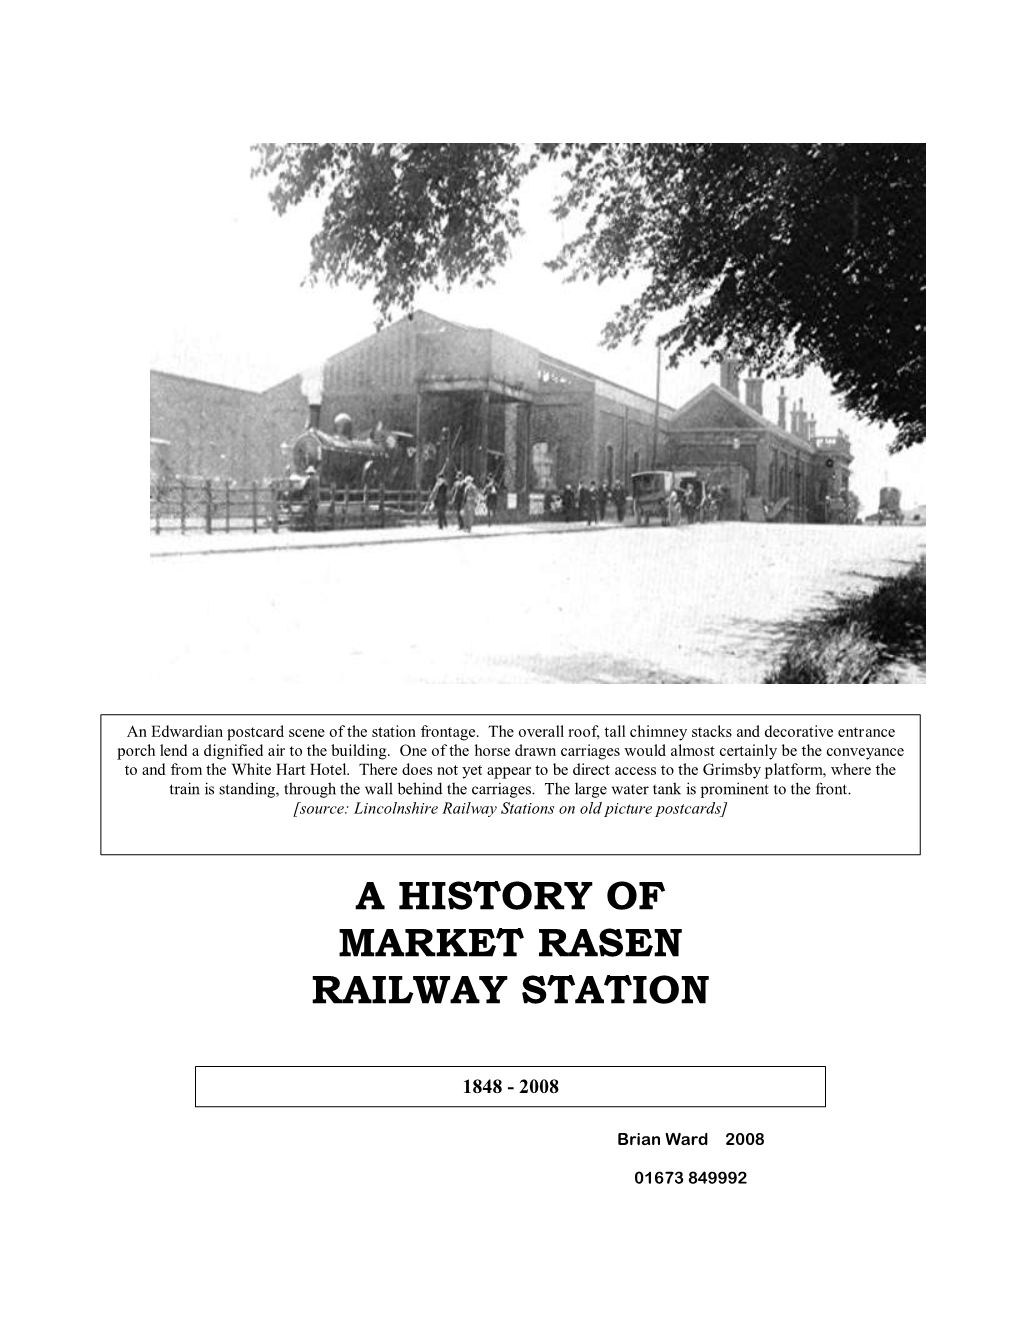 A History of Market Rasen Railway Station